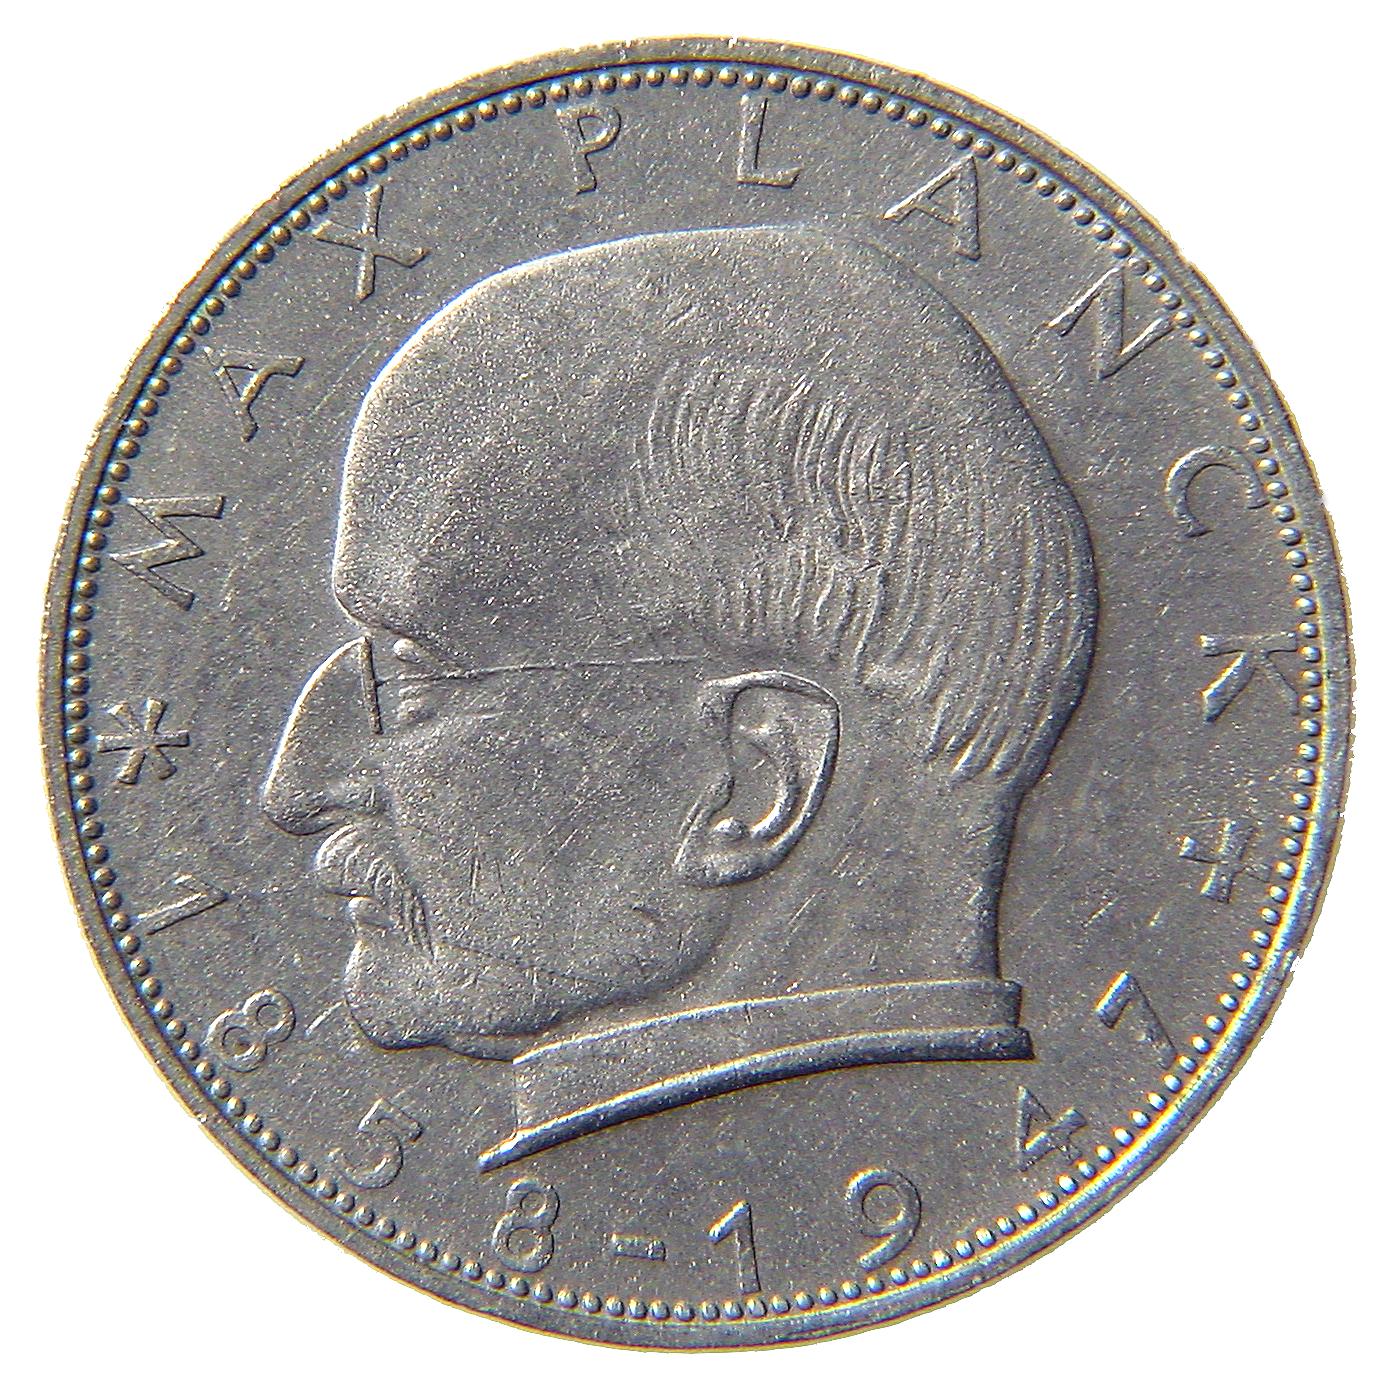 2-DM coin Planck - obverse